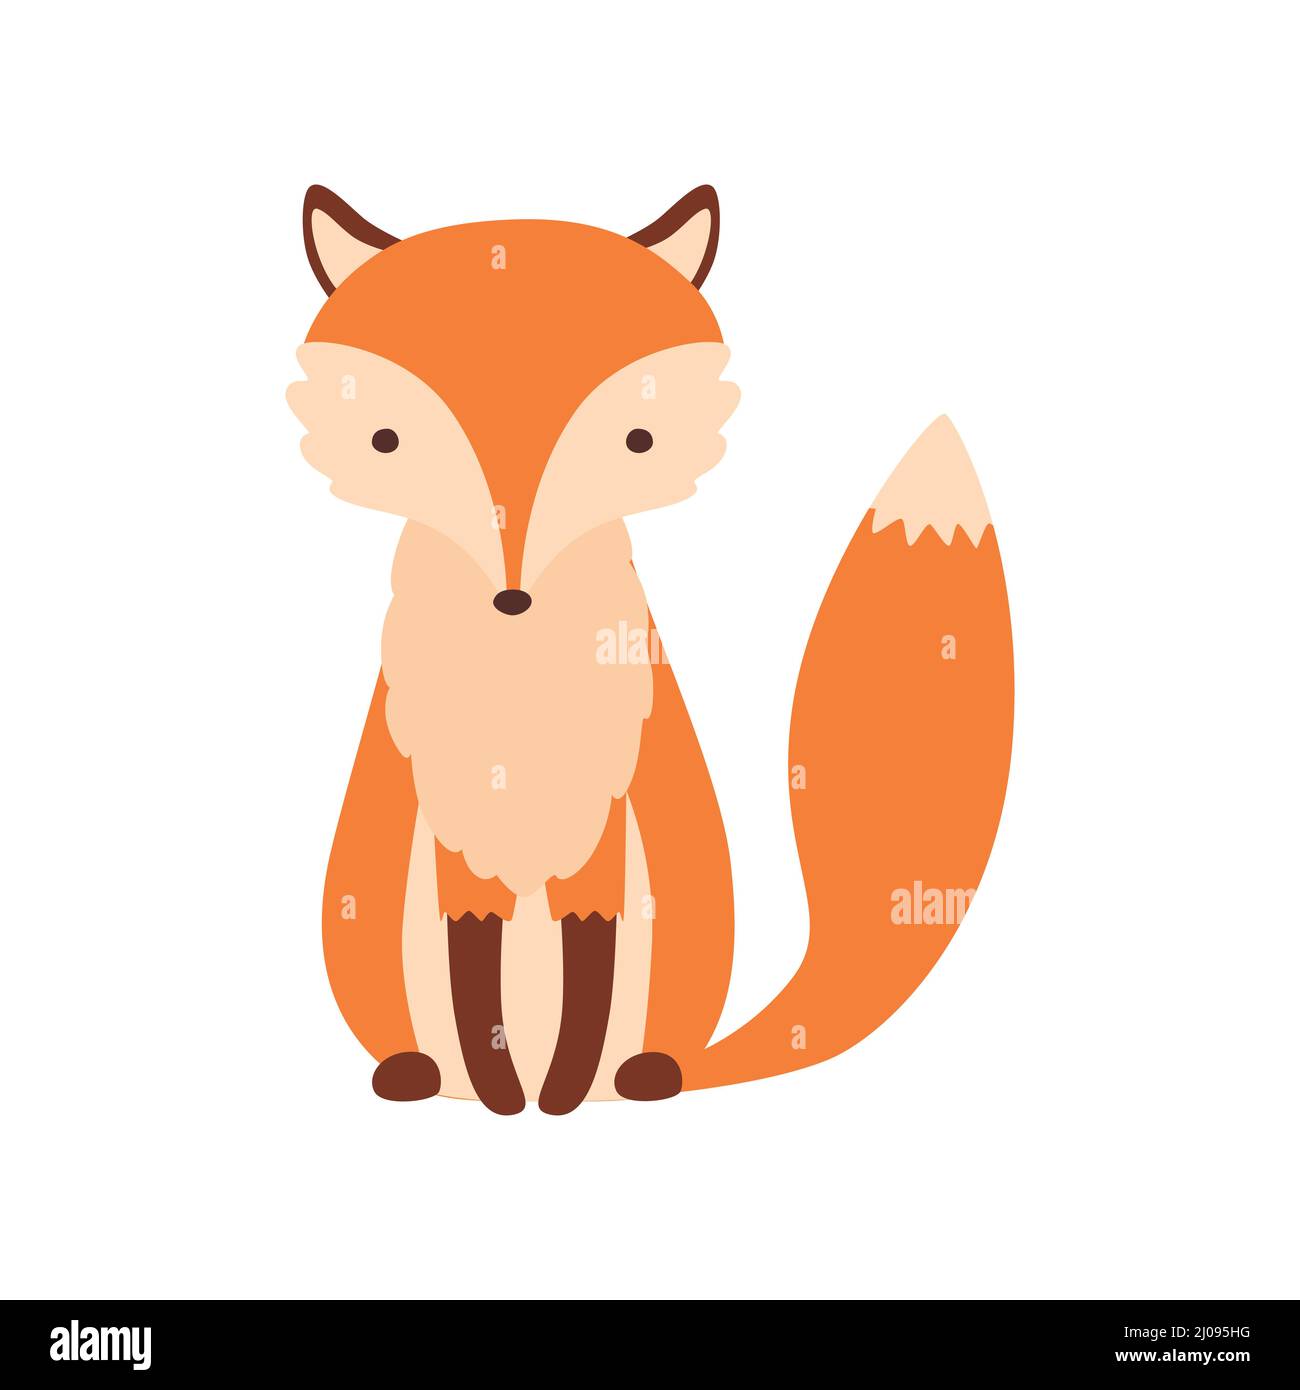 Fox. Animal cartoon. Set of cute cartoon foxes in modern simple